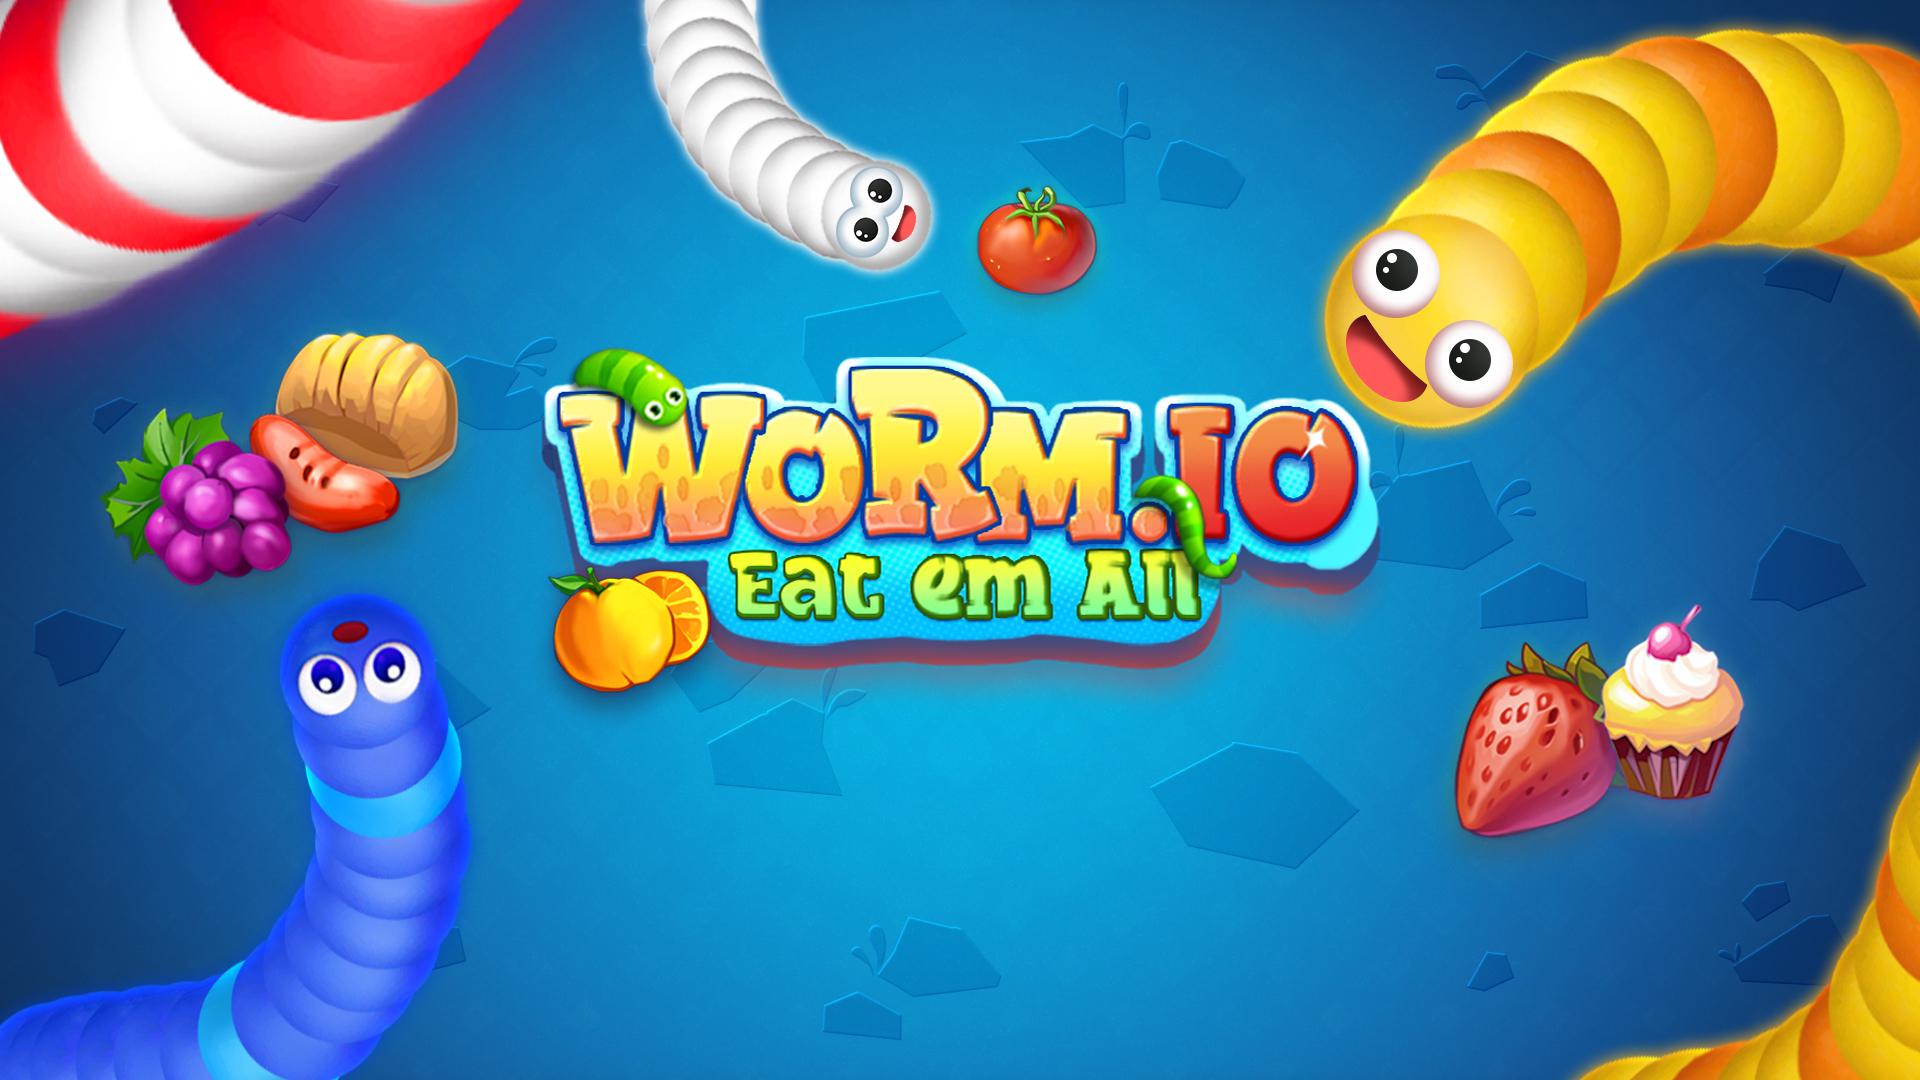 thepirat.worm.org